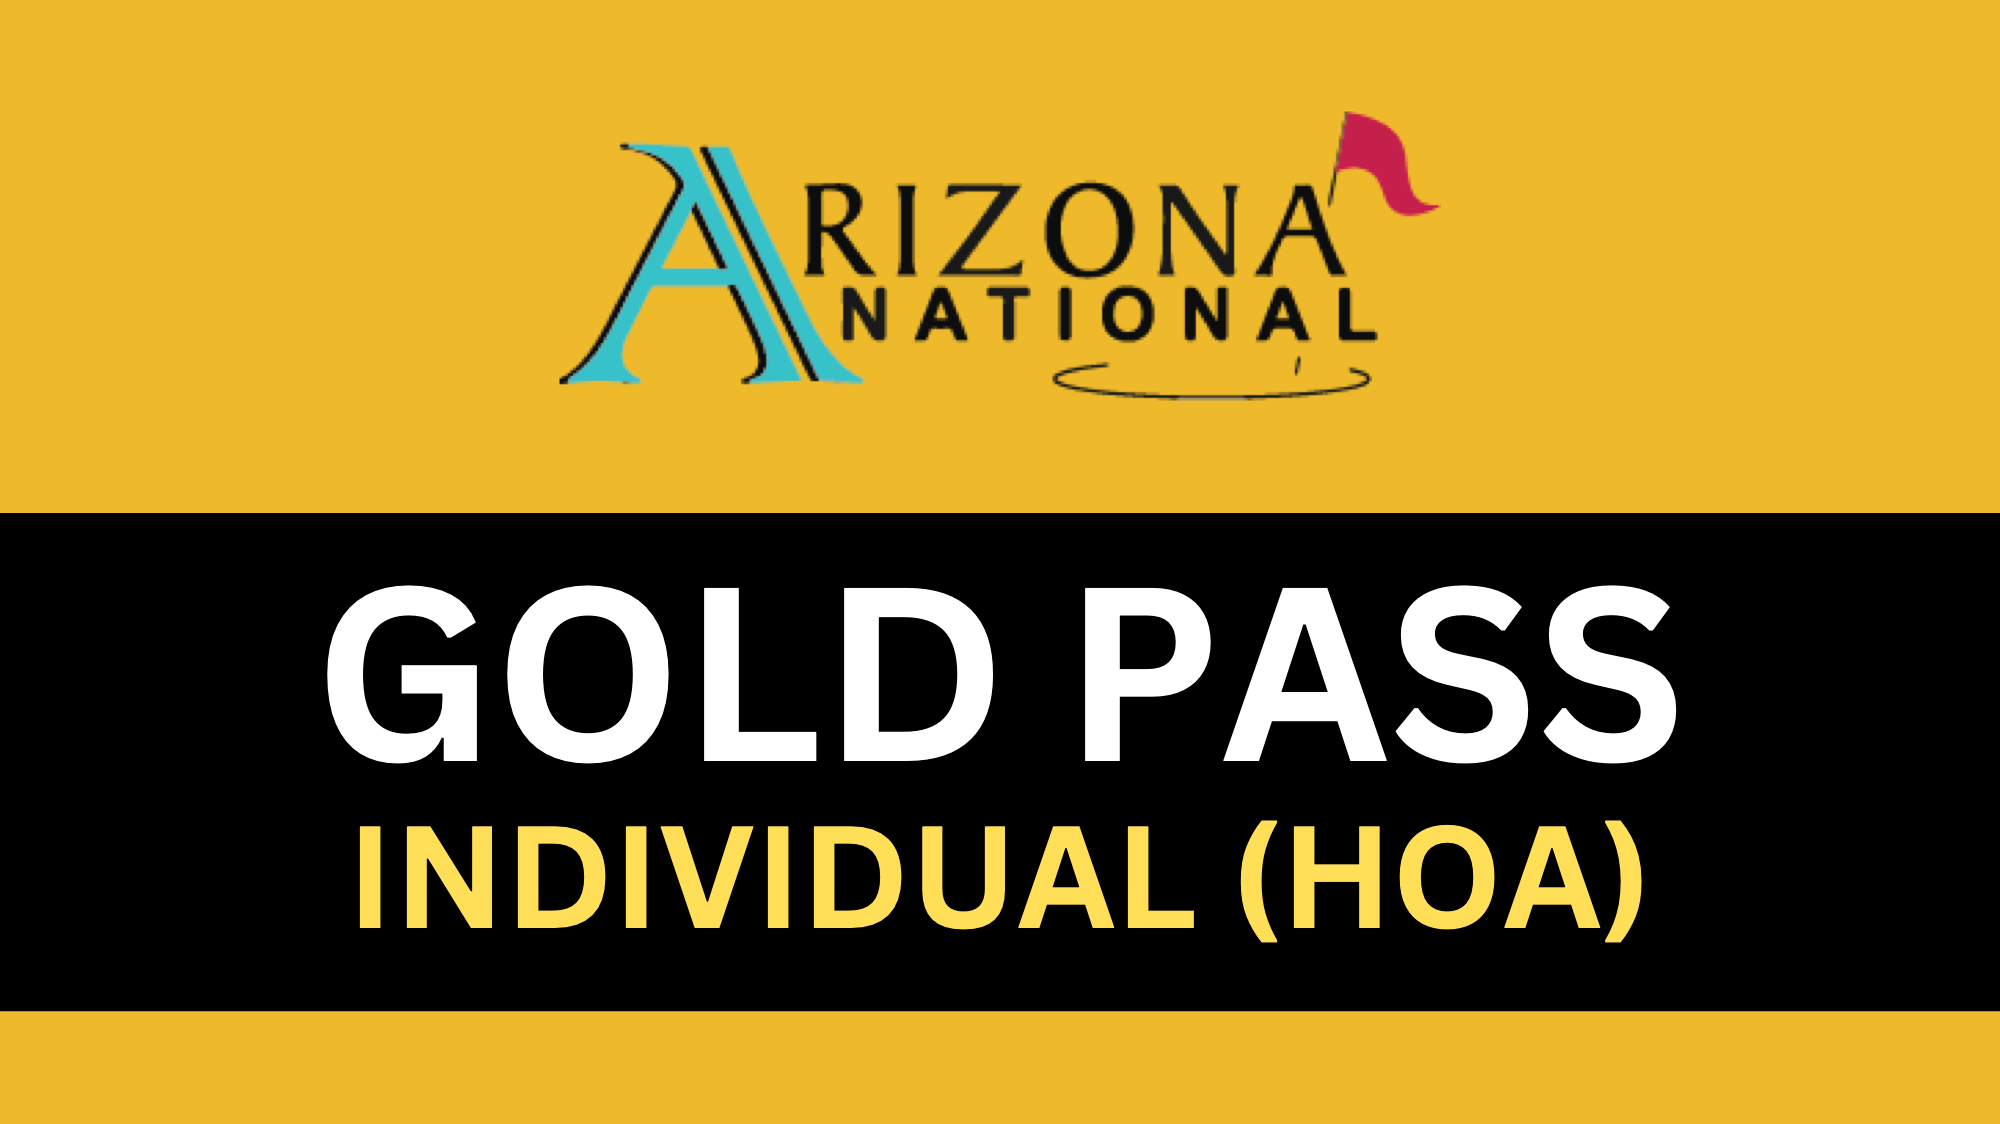 2023-2024 Annual Individual GOLD PASS (HOA)